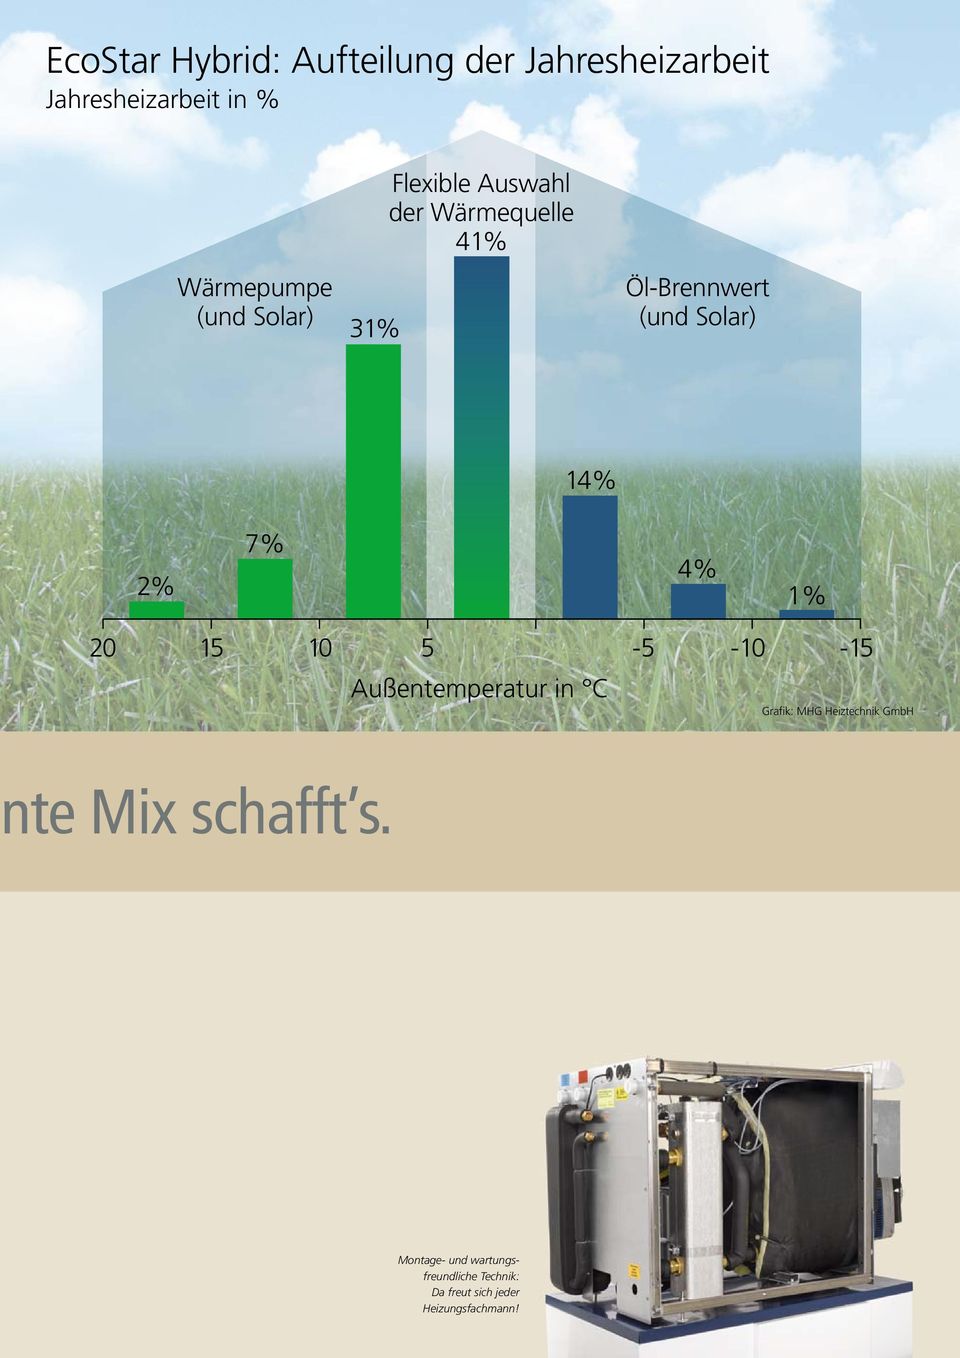 1% 20 15 10 5-5 -10-15 Außentemperatur in C Grafik: MHG Heiztechnik GmbH nte Mix